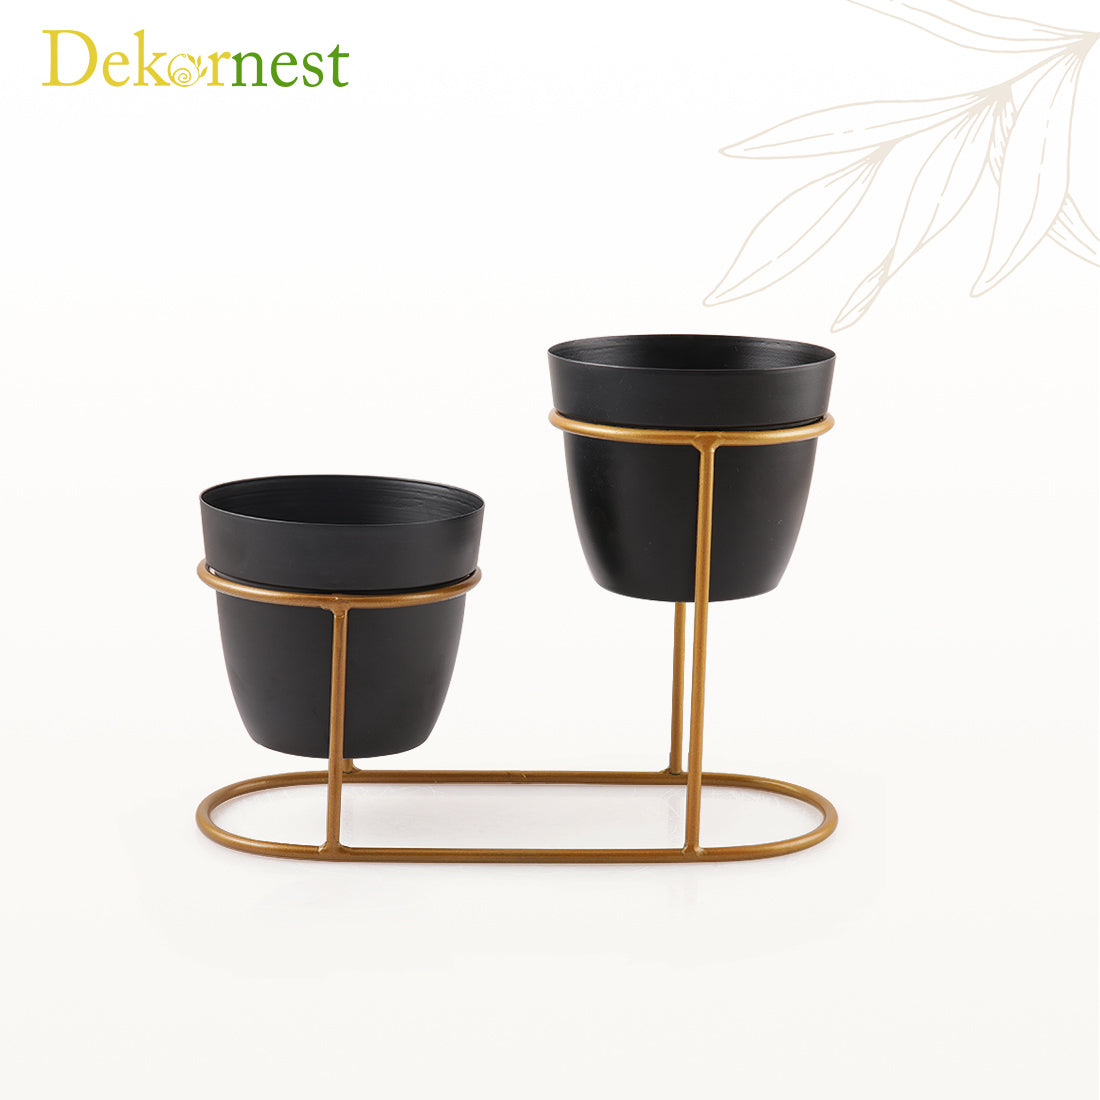 Dekornest Double Pot with Golden stand (1302B)